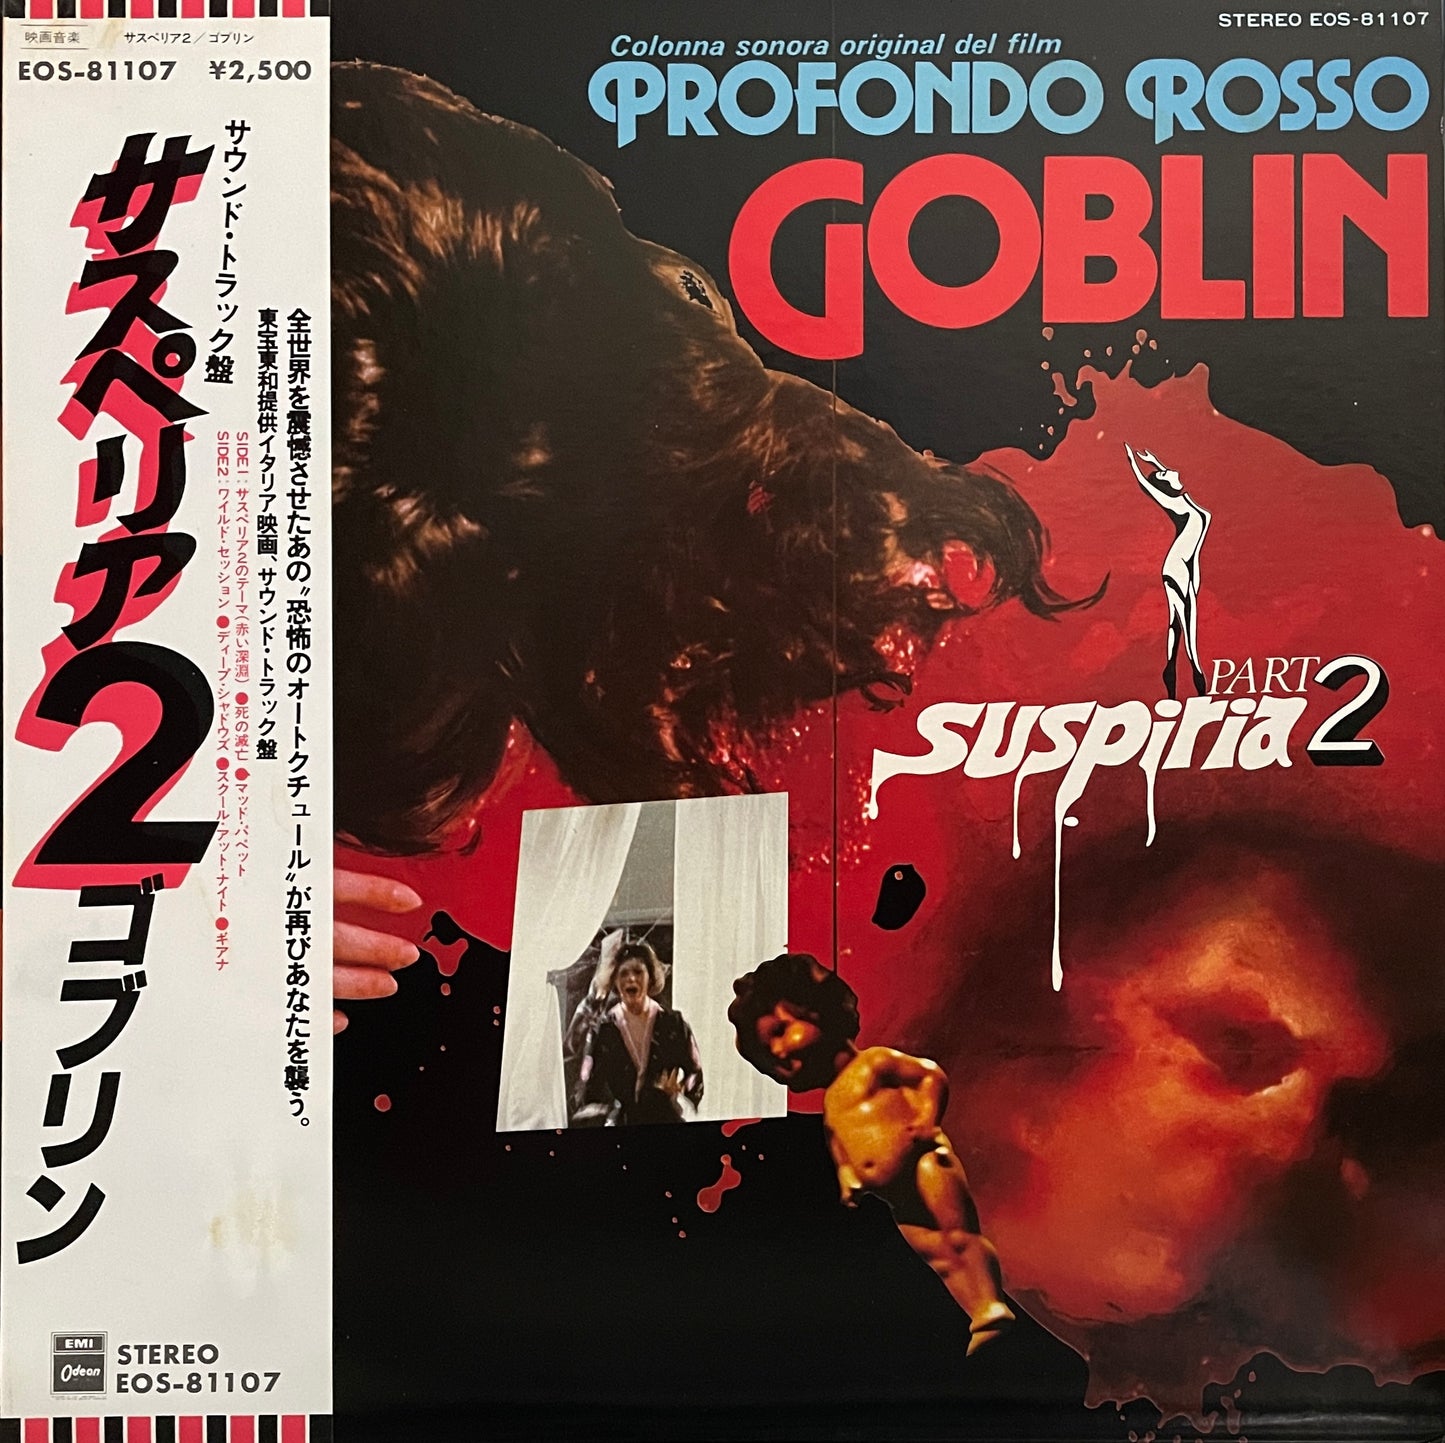 Goblin "Profondo Rosso - Suspiria Part 2" (1978)